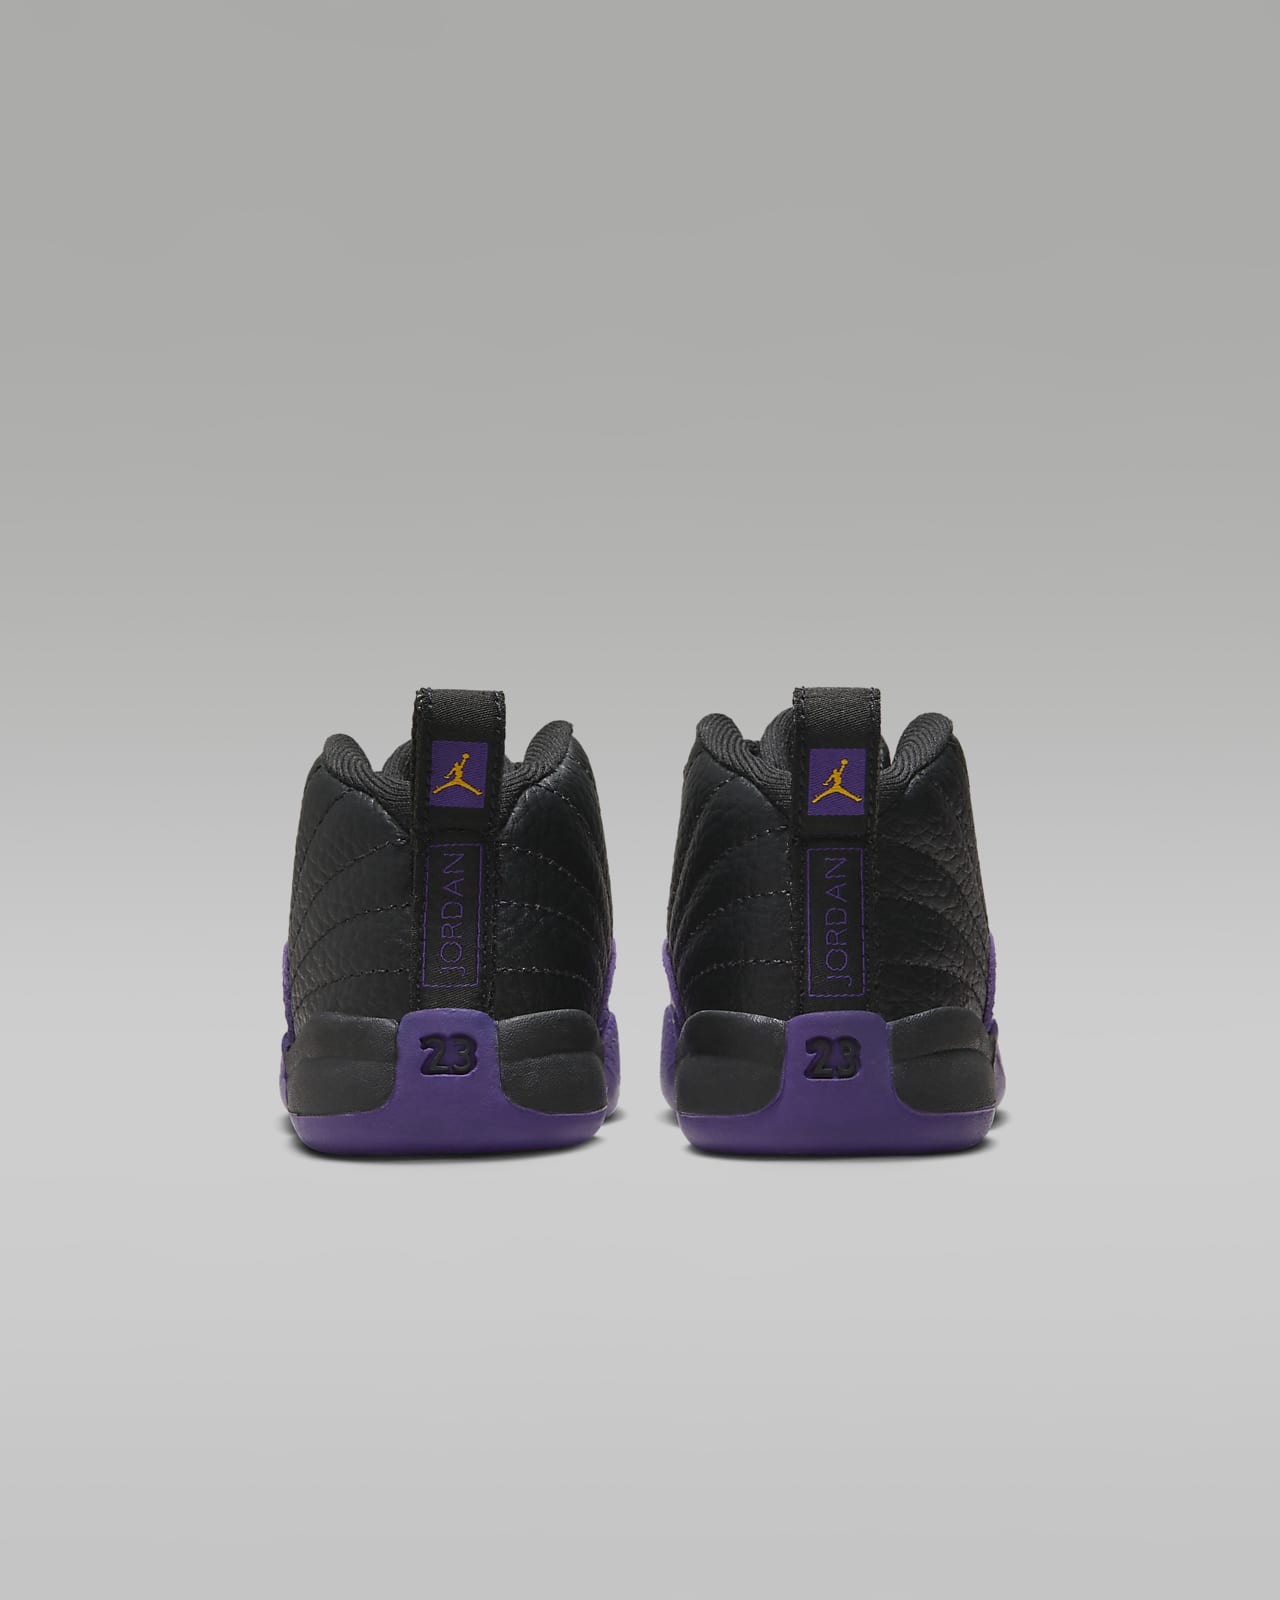 Jordan 12 Retro High-Top Sneakers in Black/Dark Concord